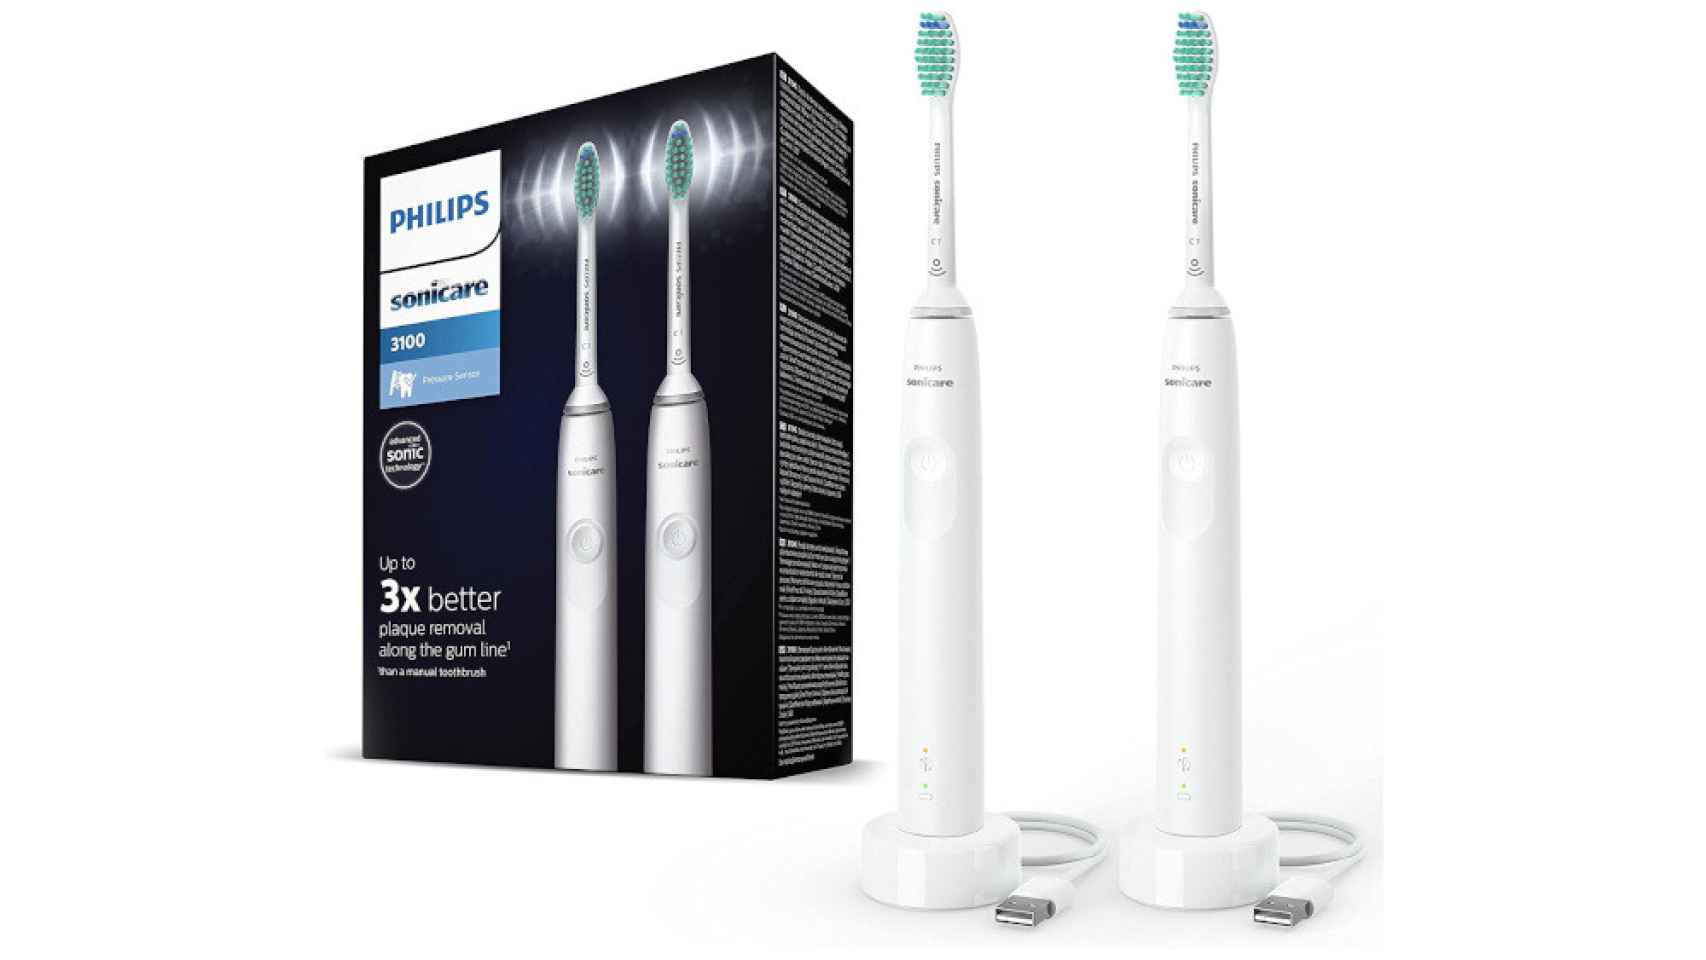 Cepillo de dientes Philips Sonicare 3100